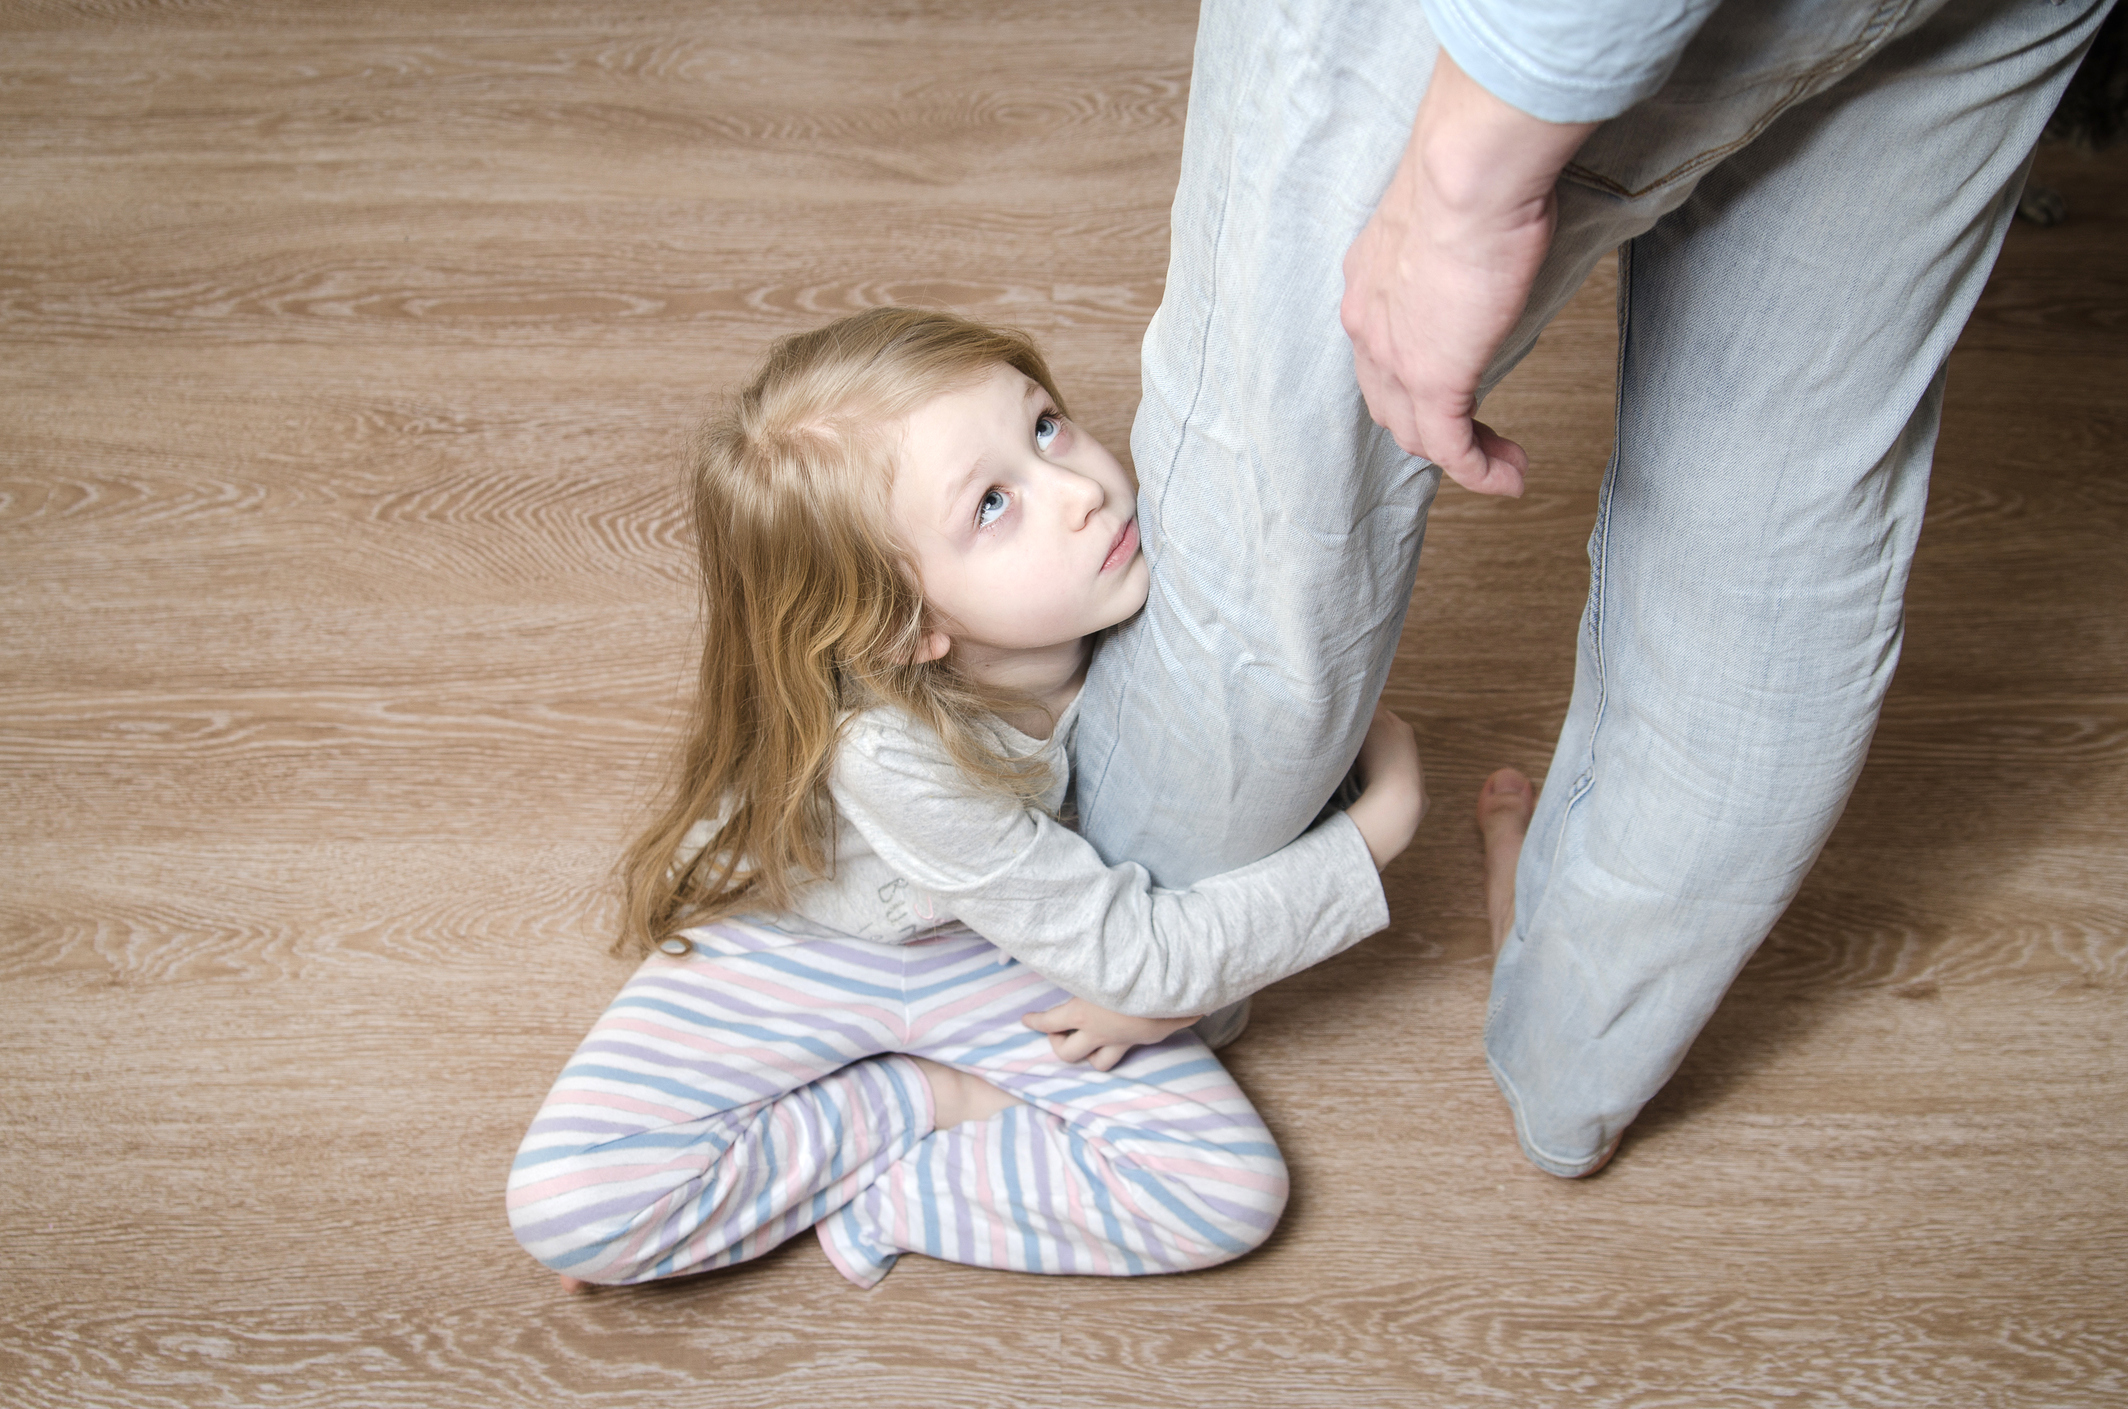 non custodial parent refuses to communicate